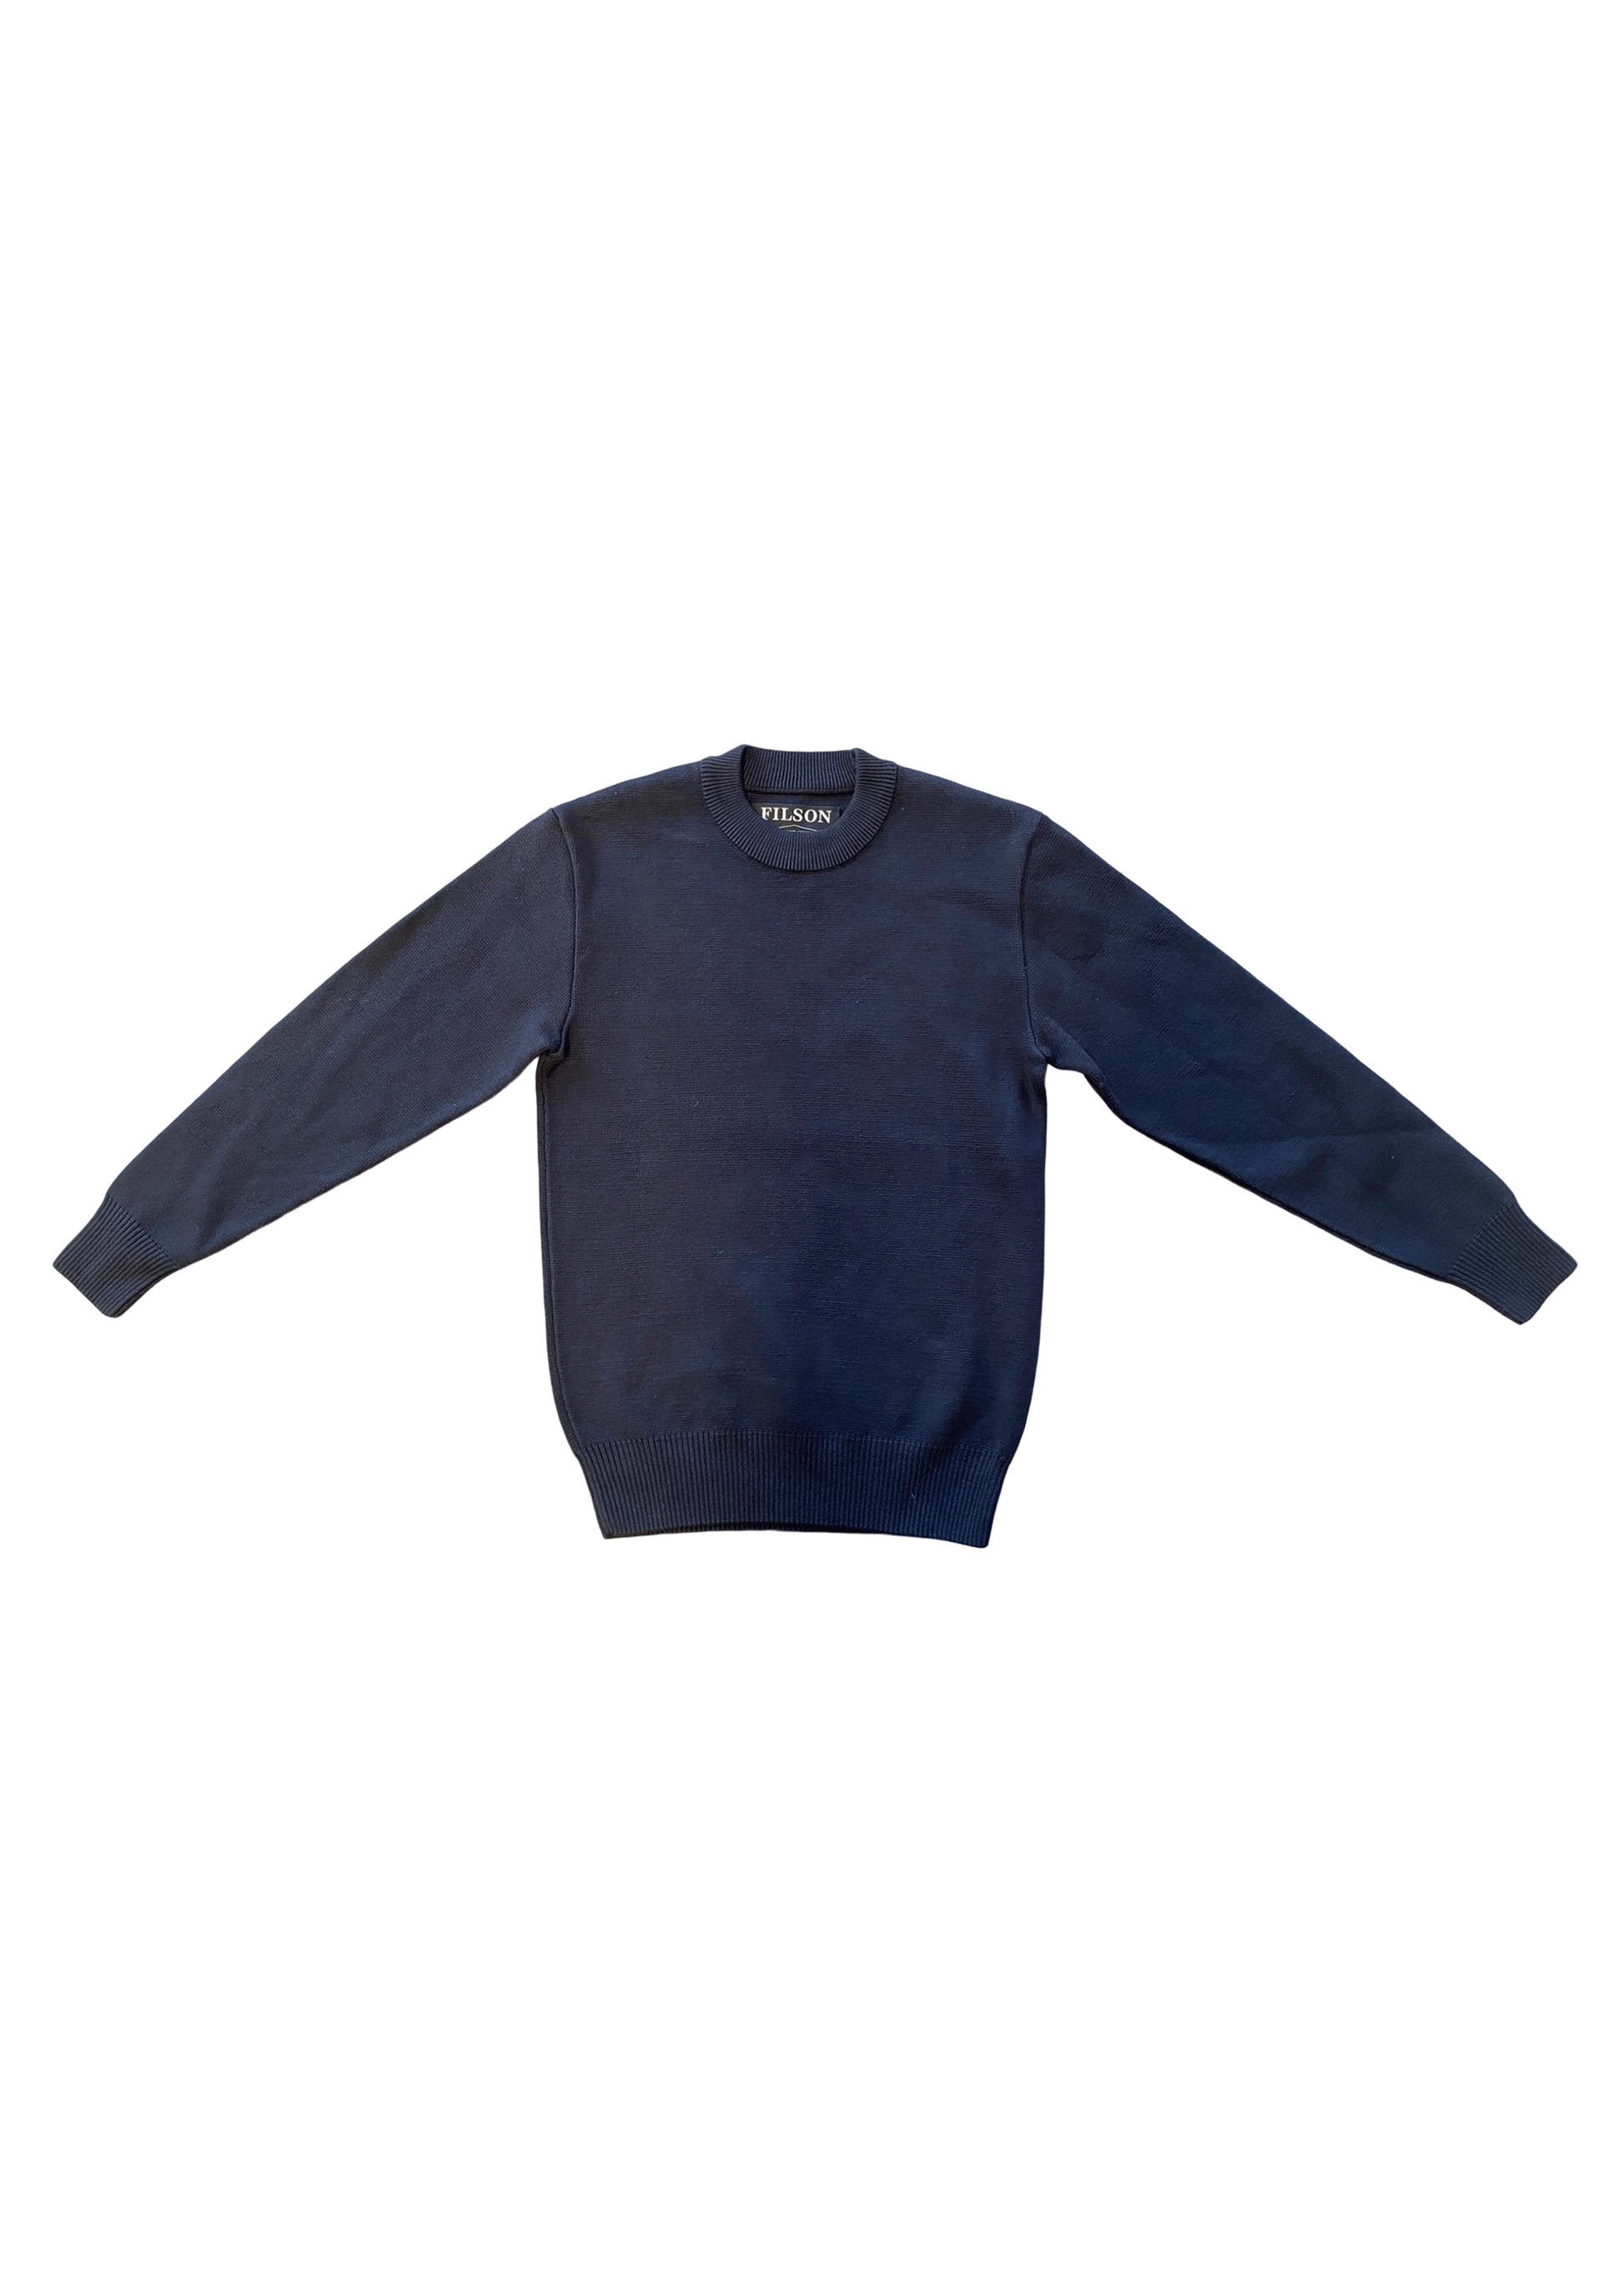 Crewneck Guide Sweater Filson, 45% OFF